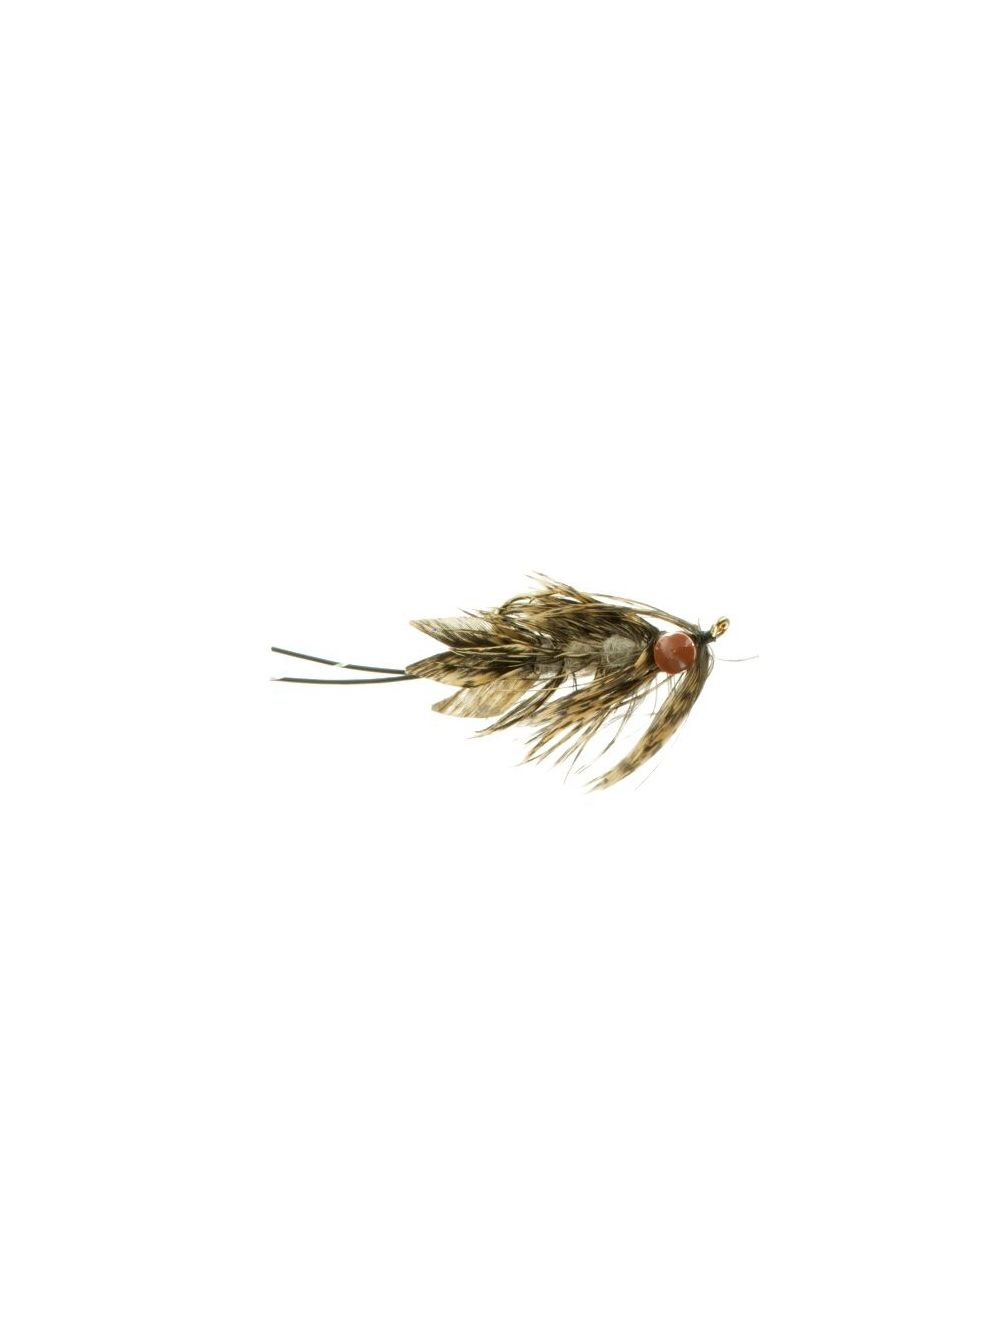 https://eadn-wc02-1020161.nxedge.io/cdn/media/catalog/product/cache/32b930e20bfef0c9badd7ee253a86131/n/e/near-nuff-crawfish-rust-carp-fly-fishing-flies-carp_preview.jpeg